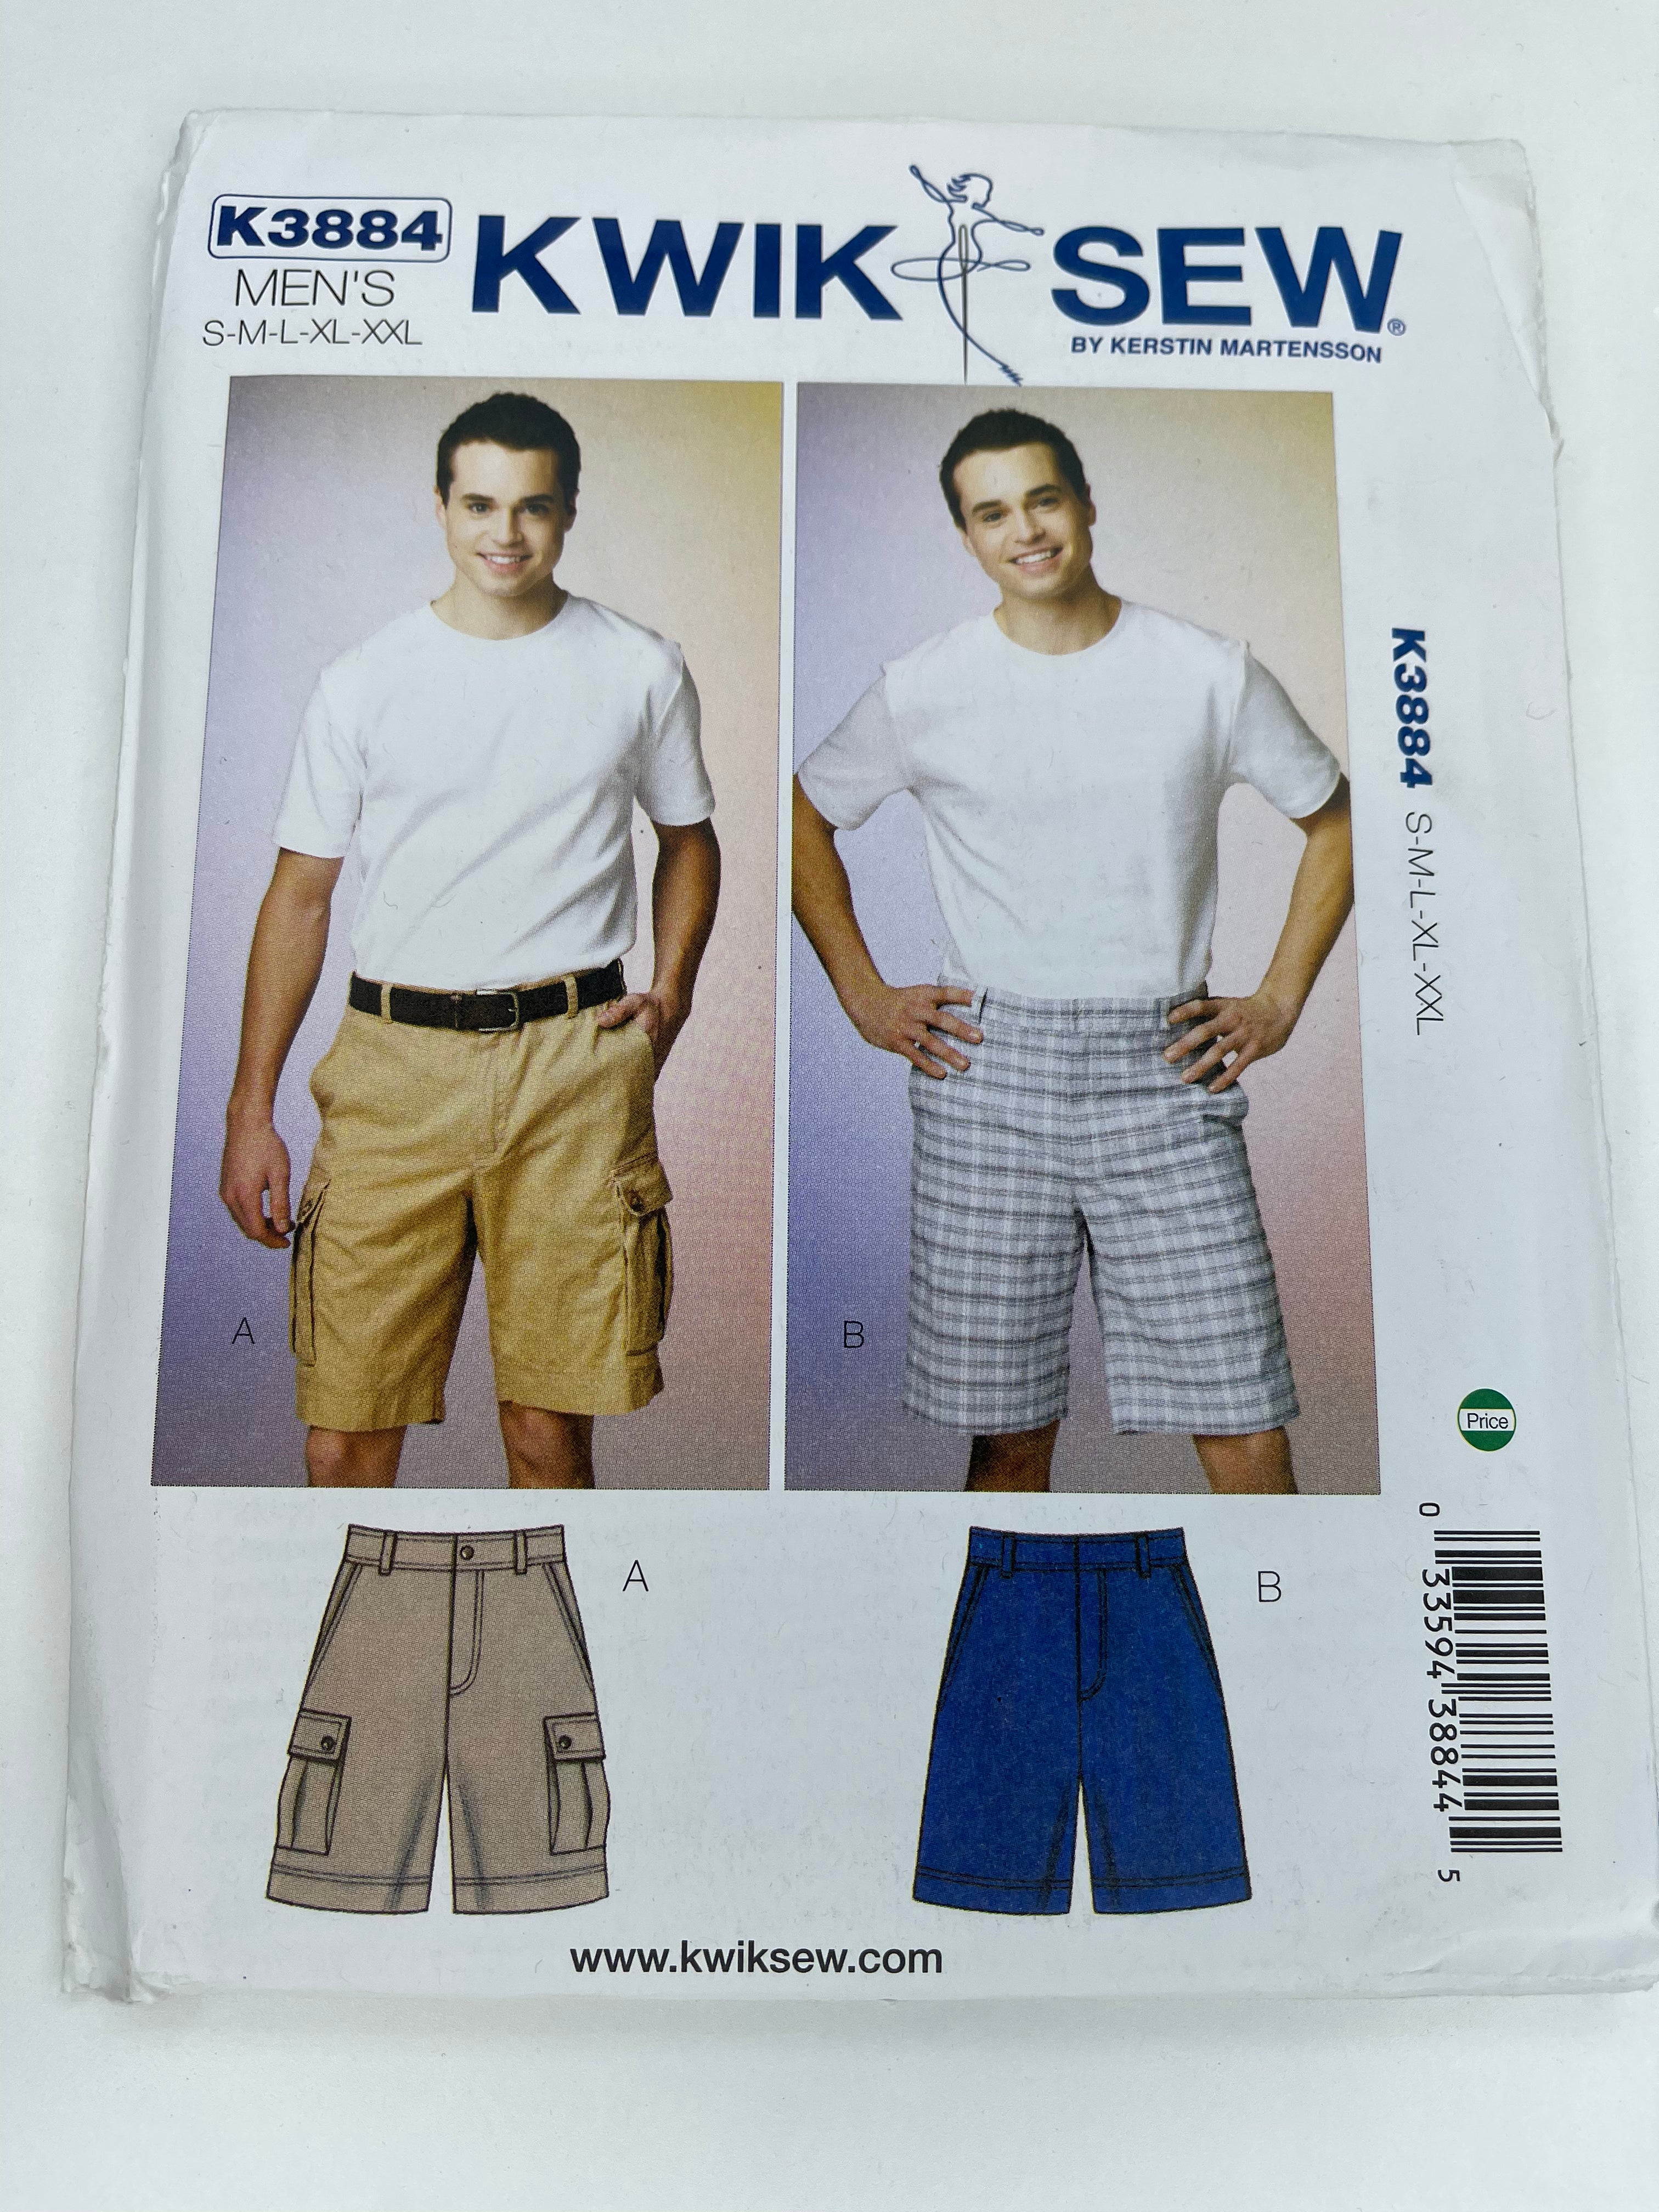 Burda Women Pants Pattern - 5946 – G.k Fashion Fabrics